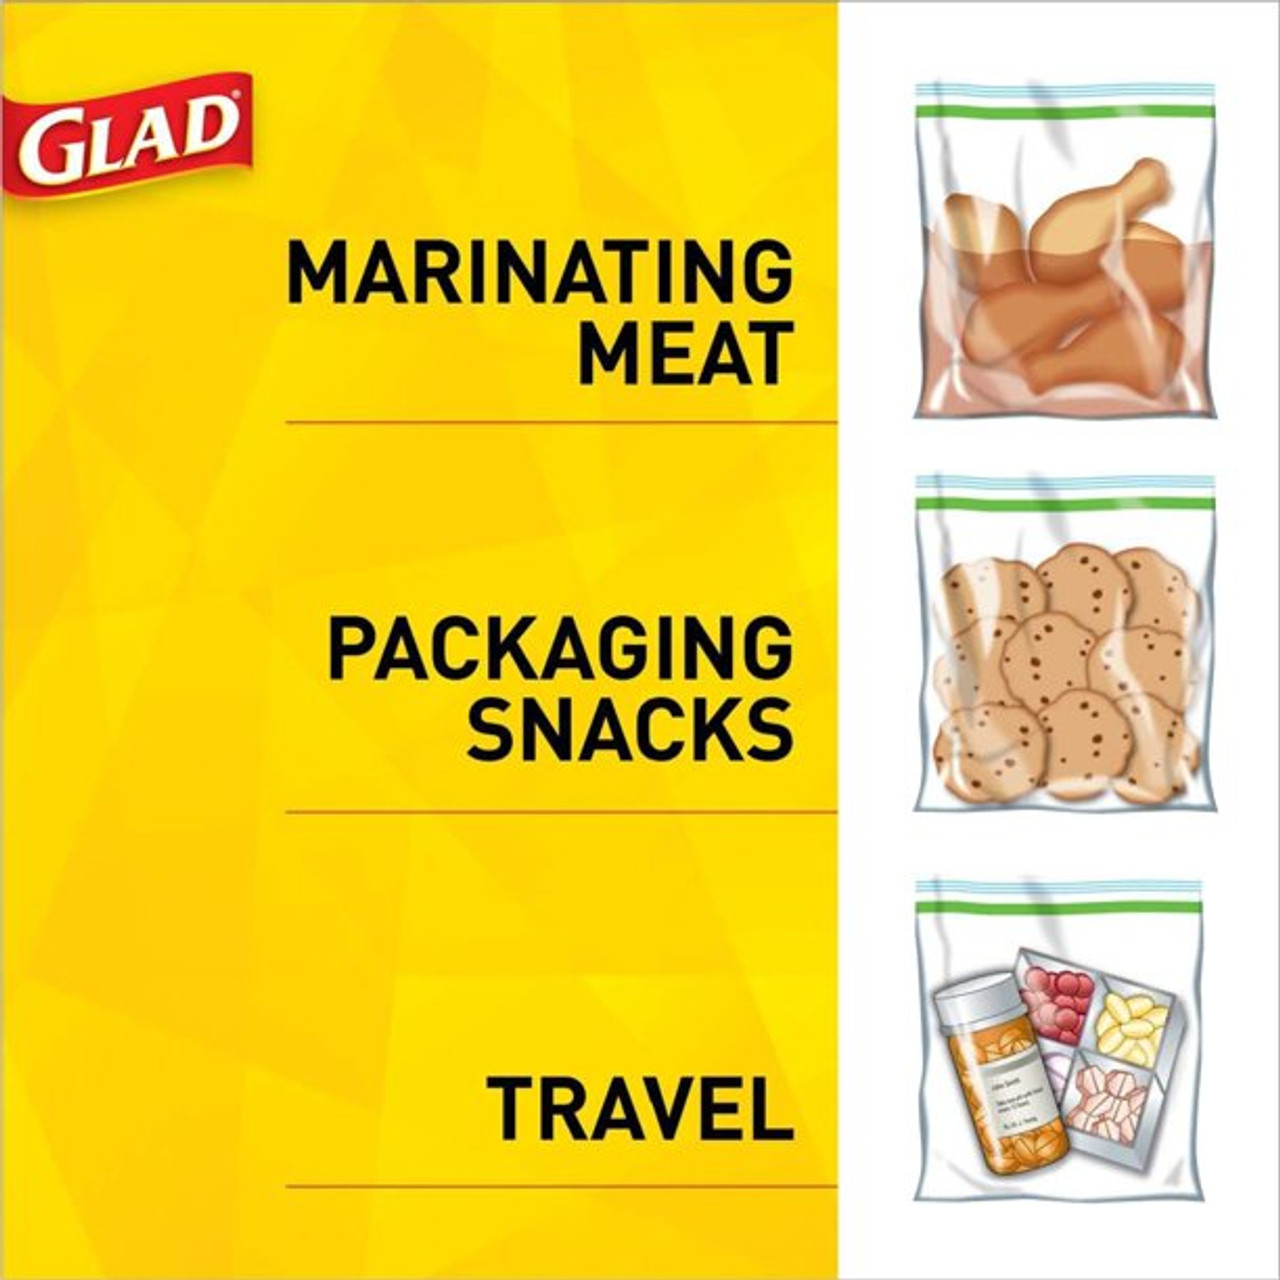 Glad Zipper Food Storage Freezer Bags - Gallon - 20 Count